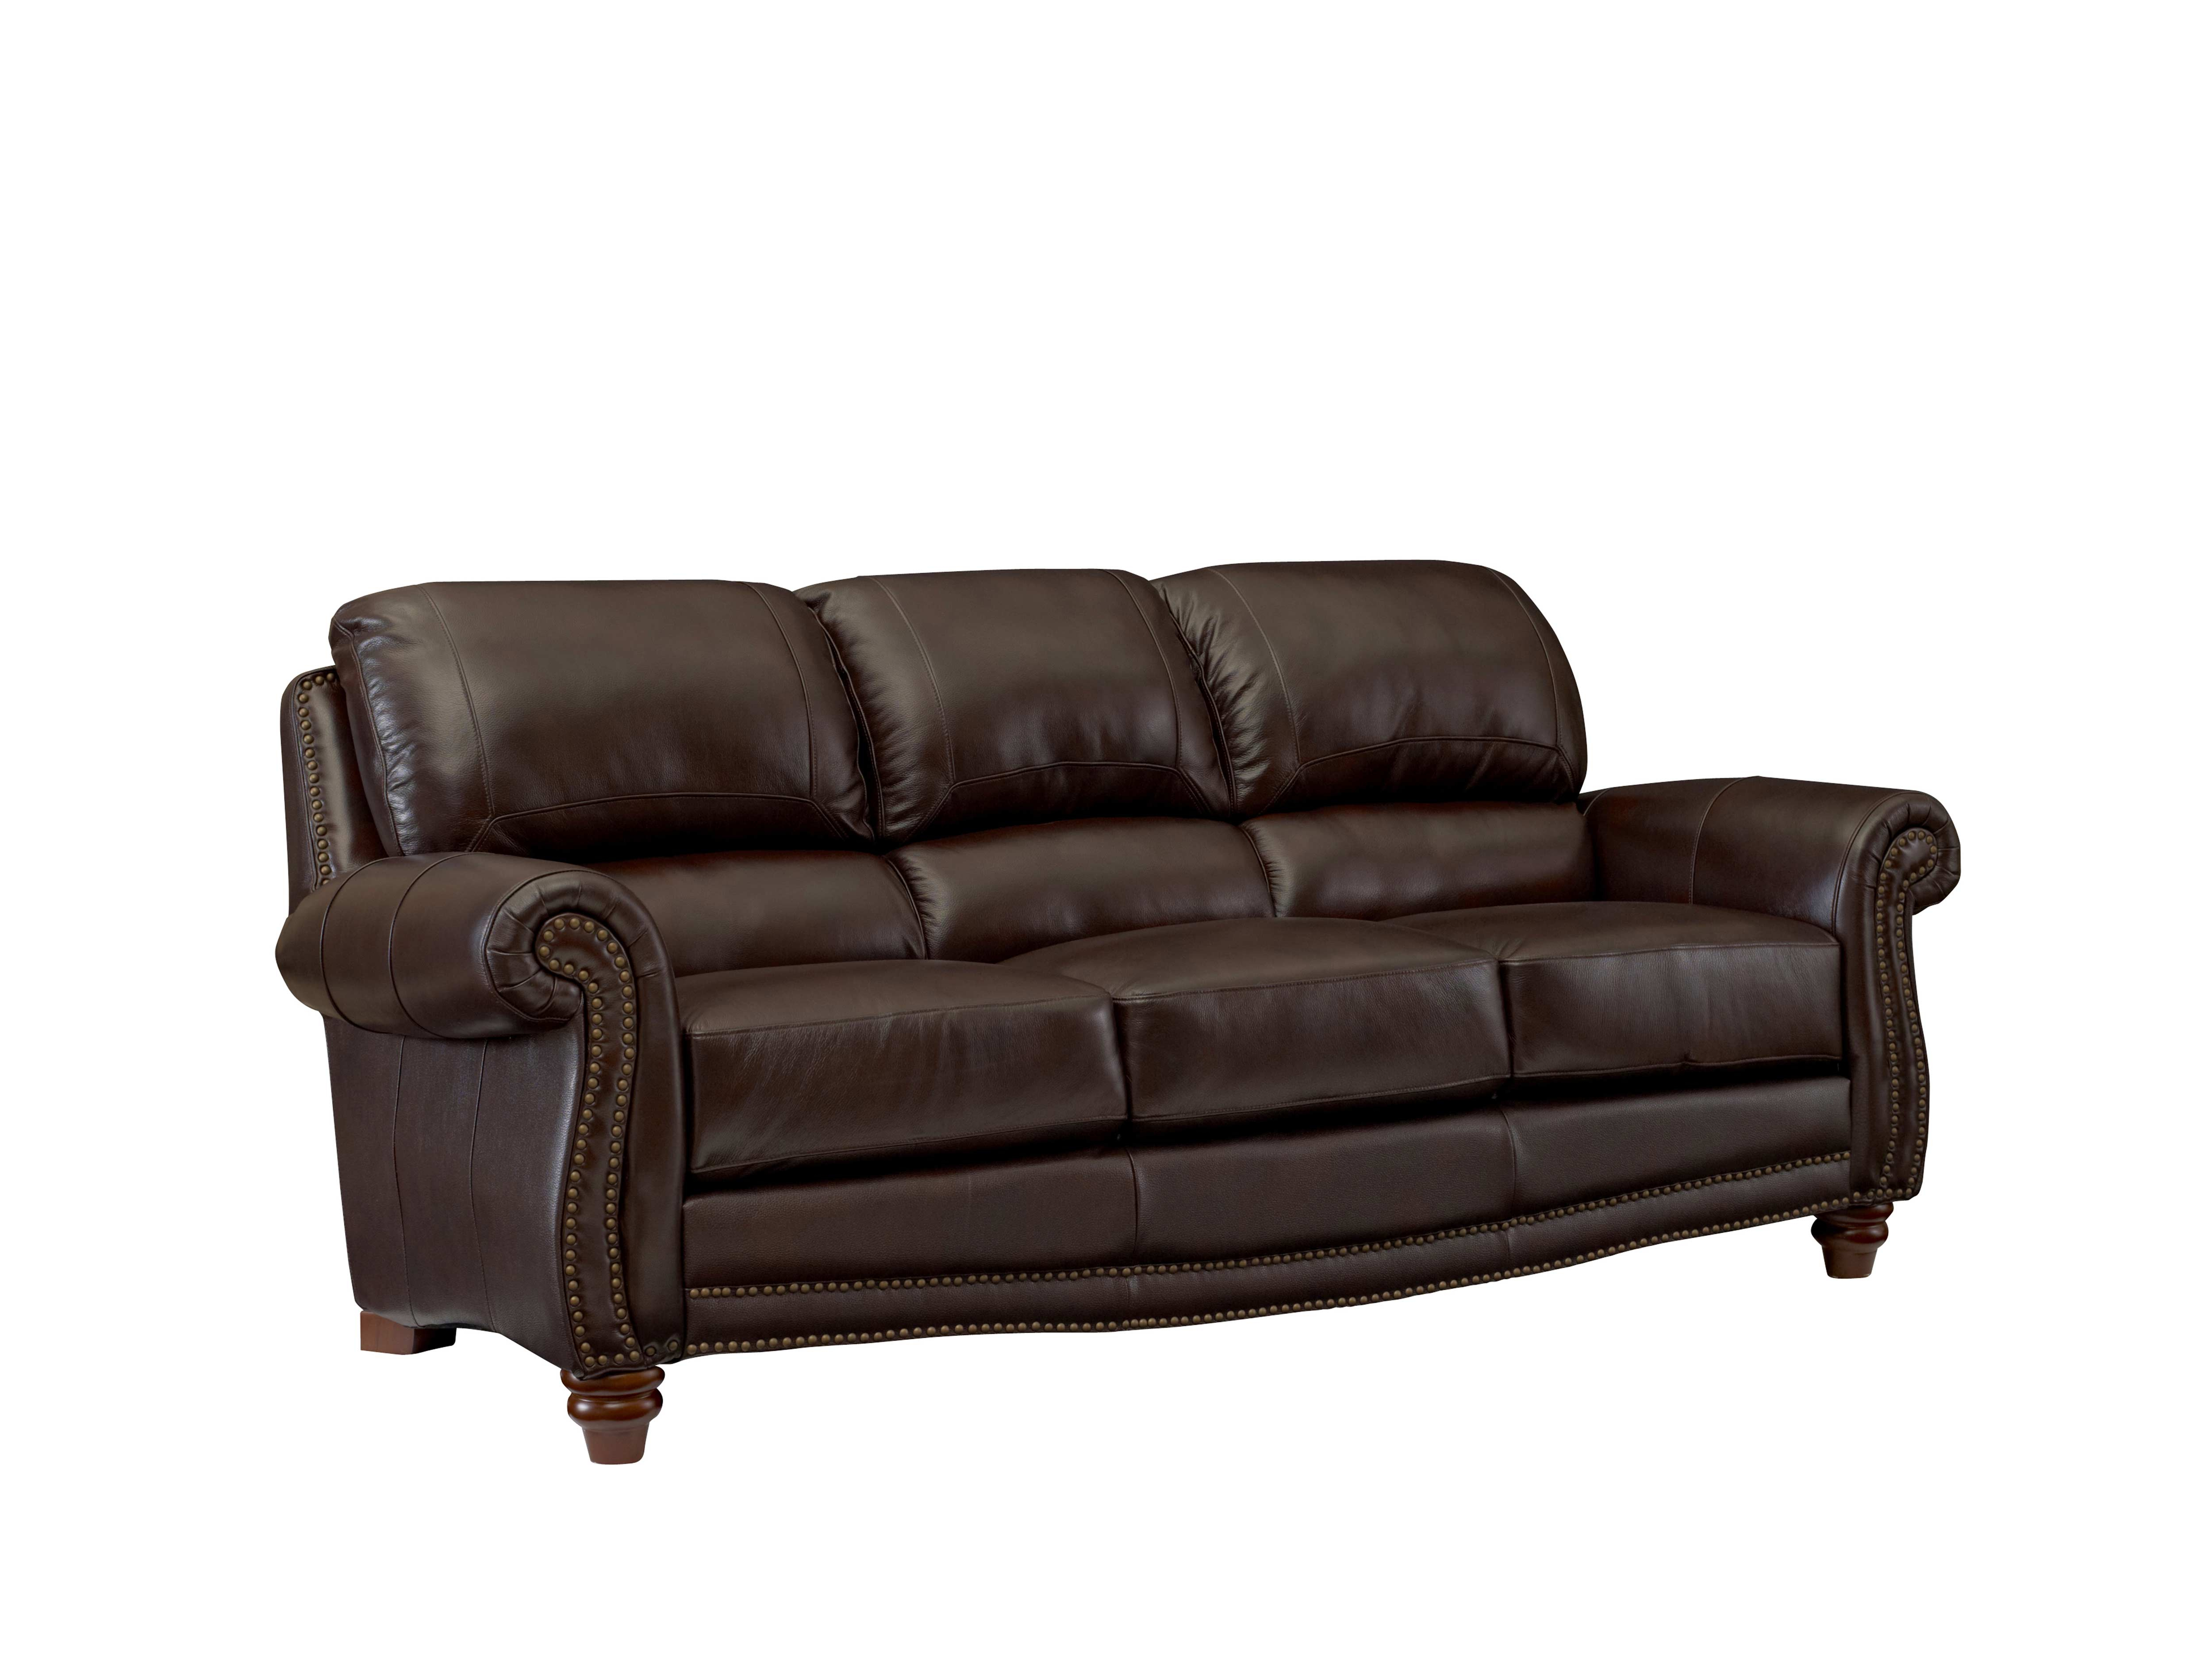 jesse james leather sofa